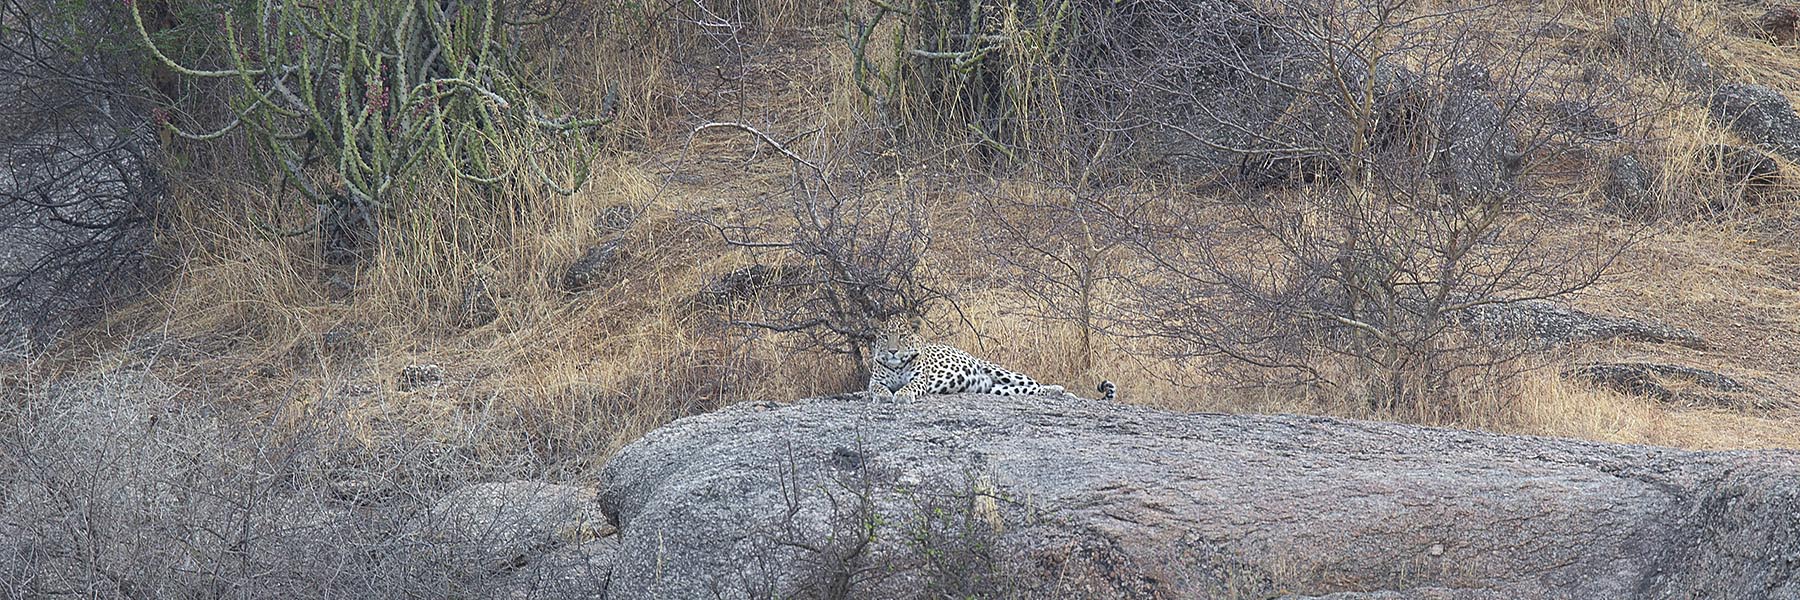 Bera and Jawai Leopards